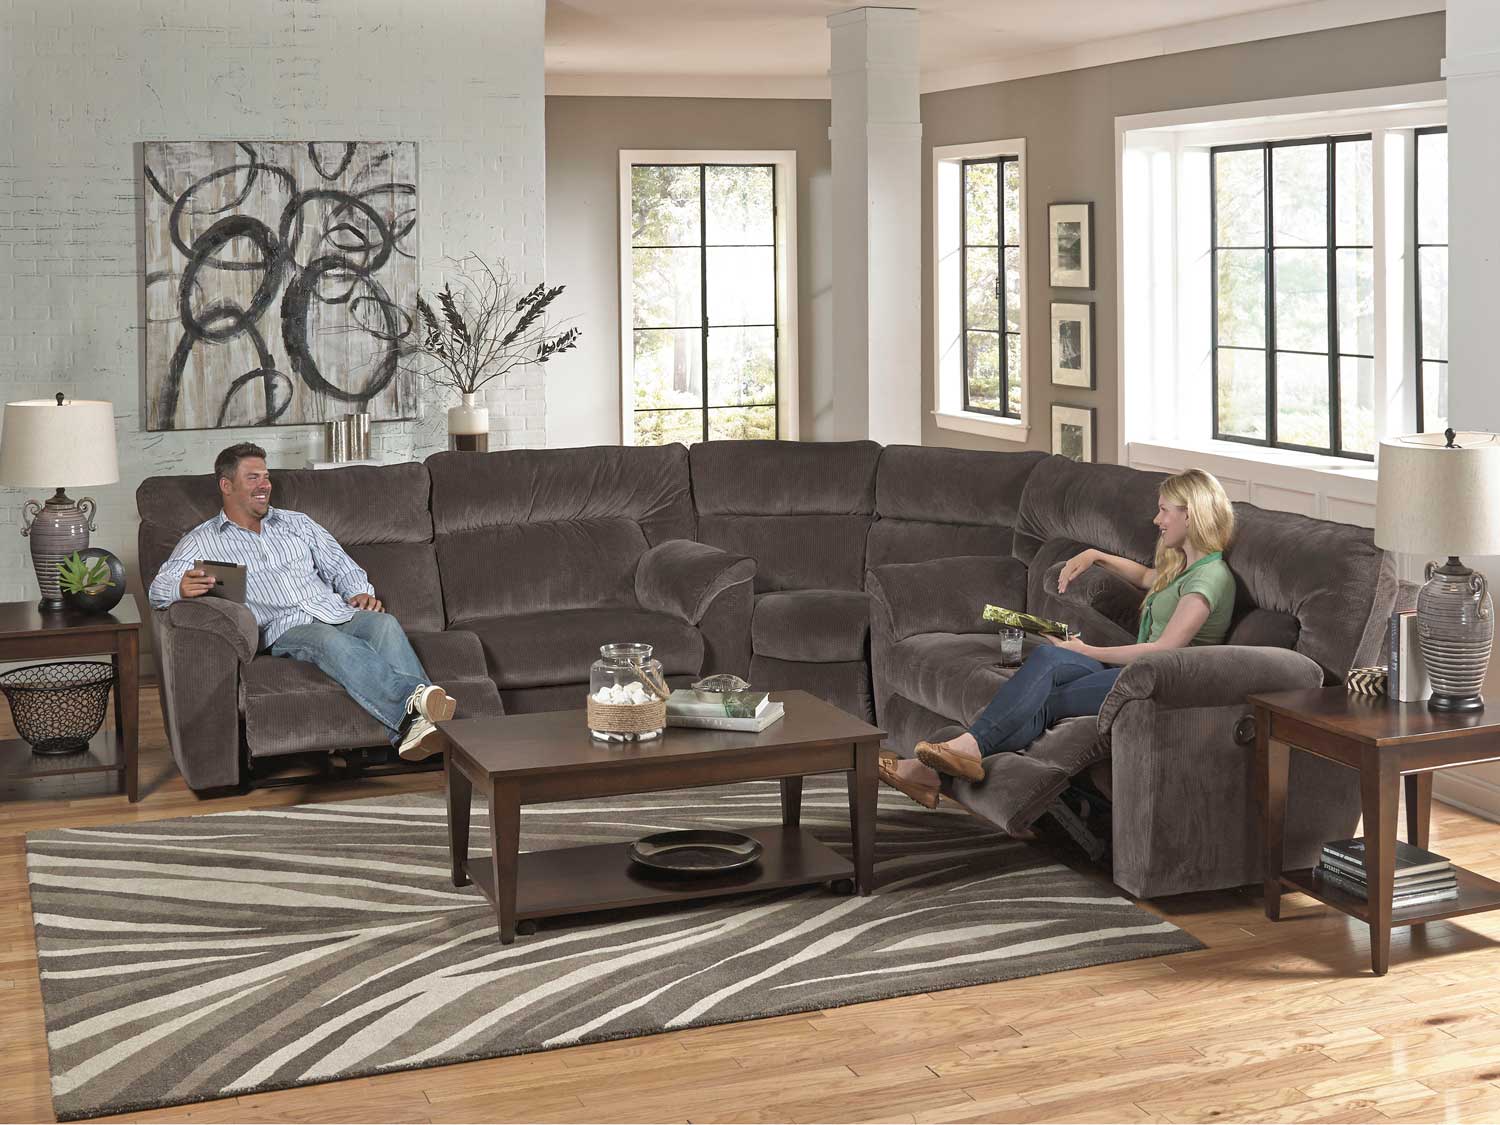 CatNapper Nichols Reclining Sectional Sofa Set - Granite